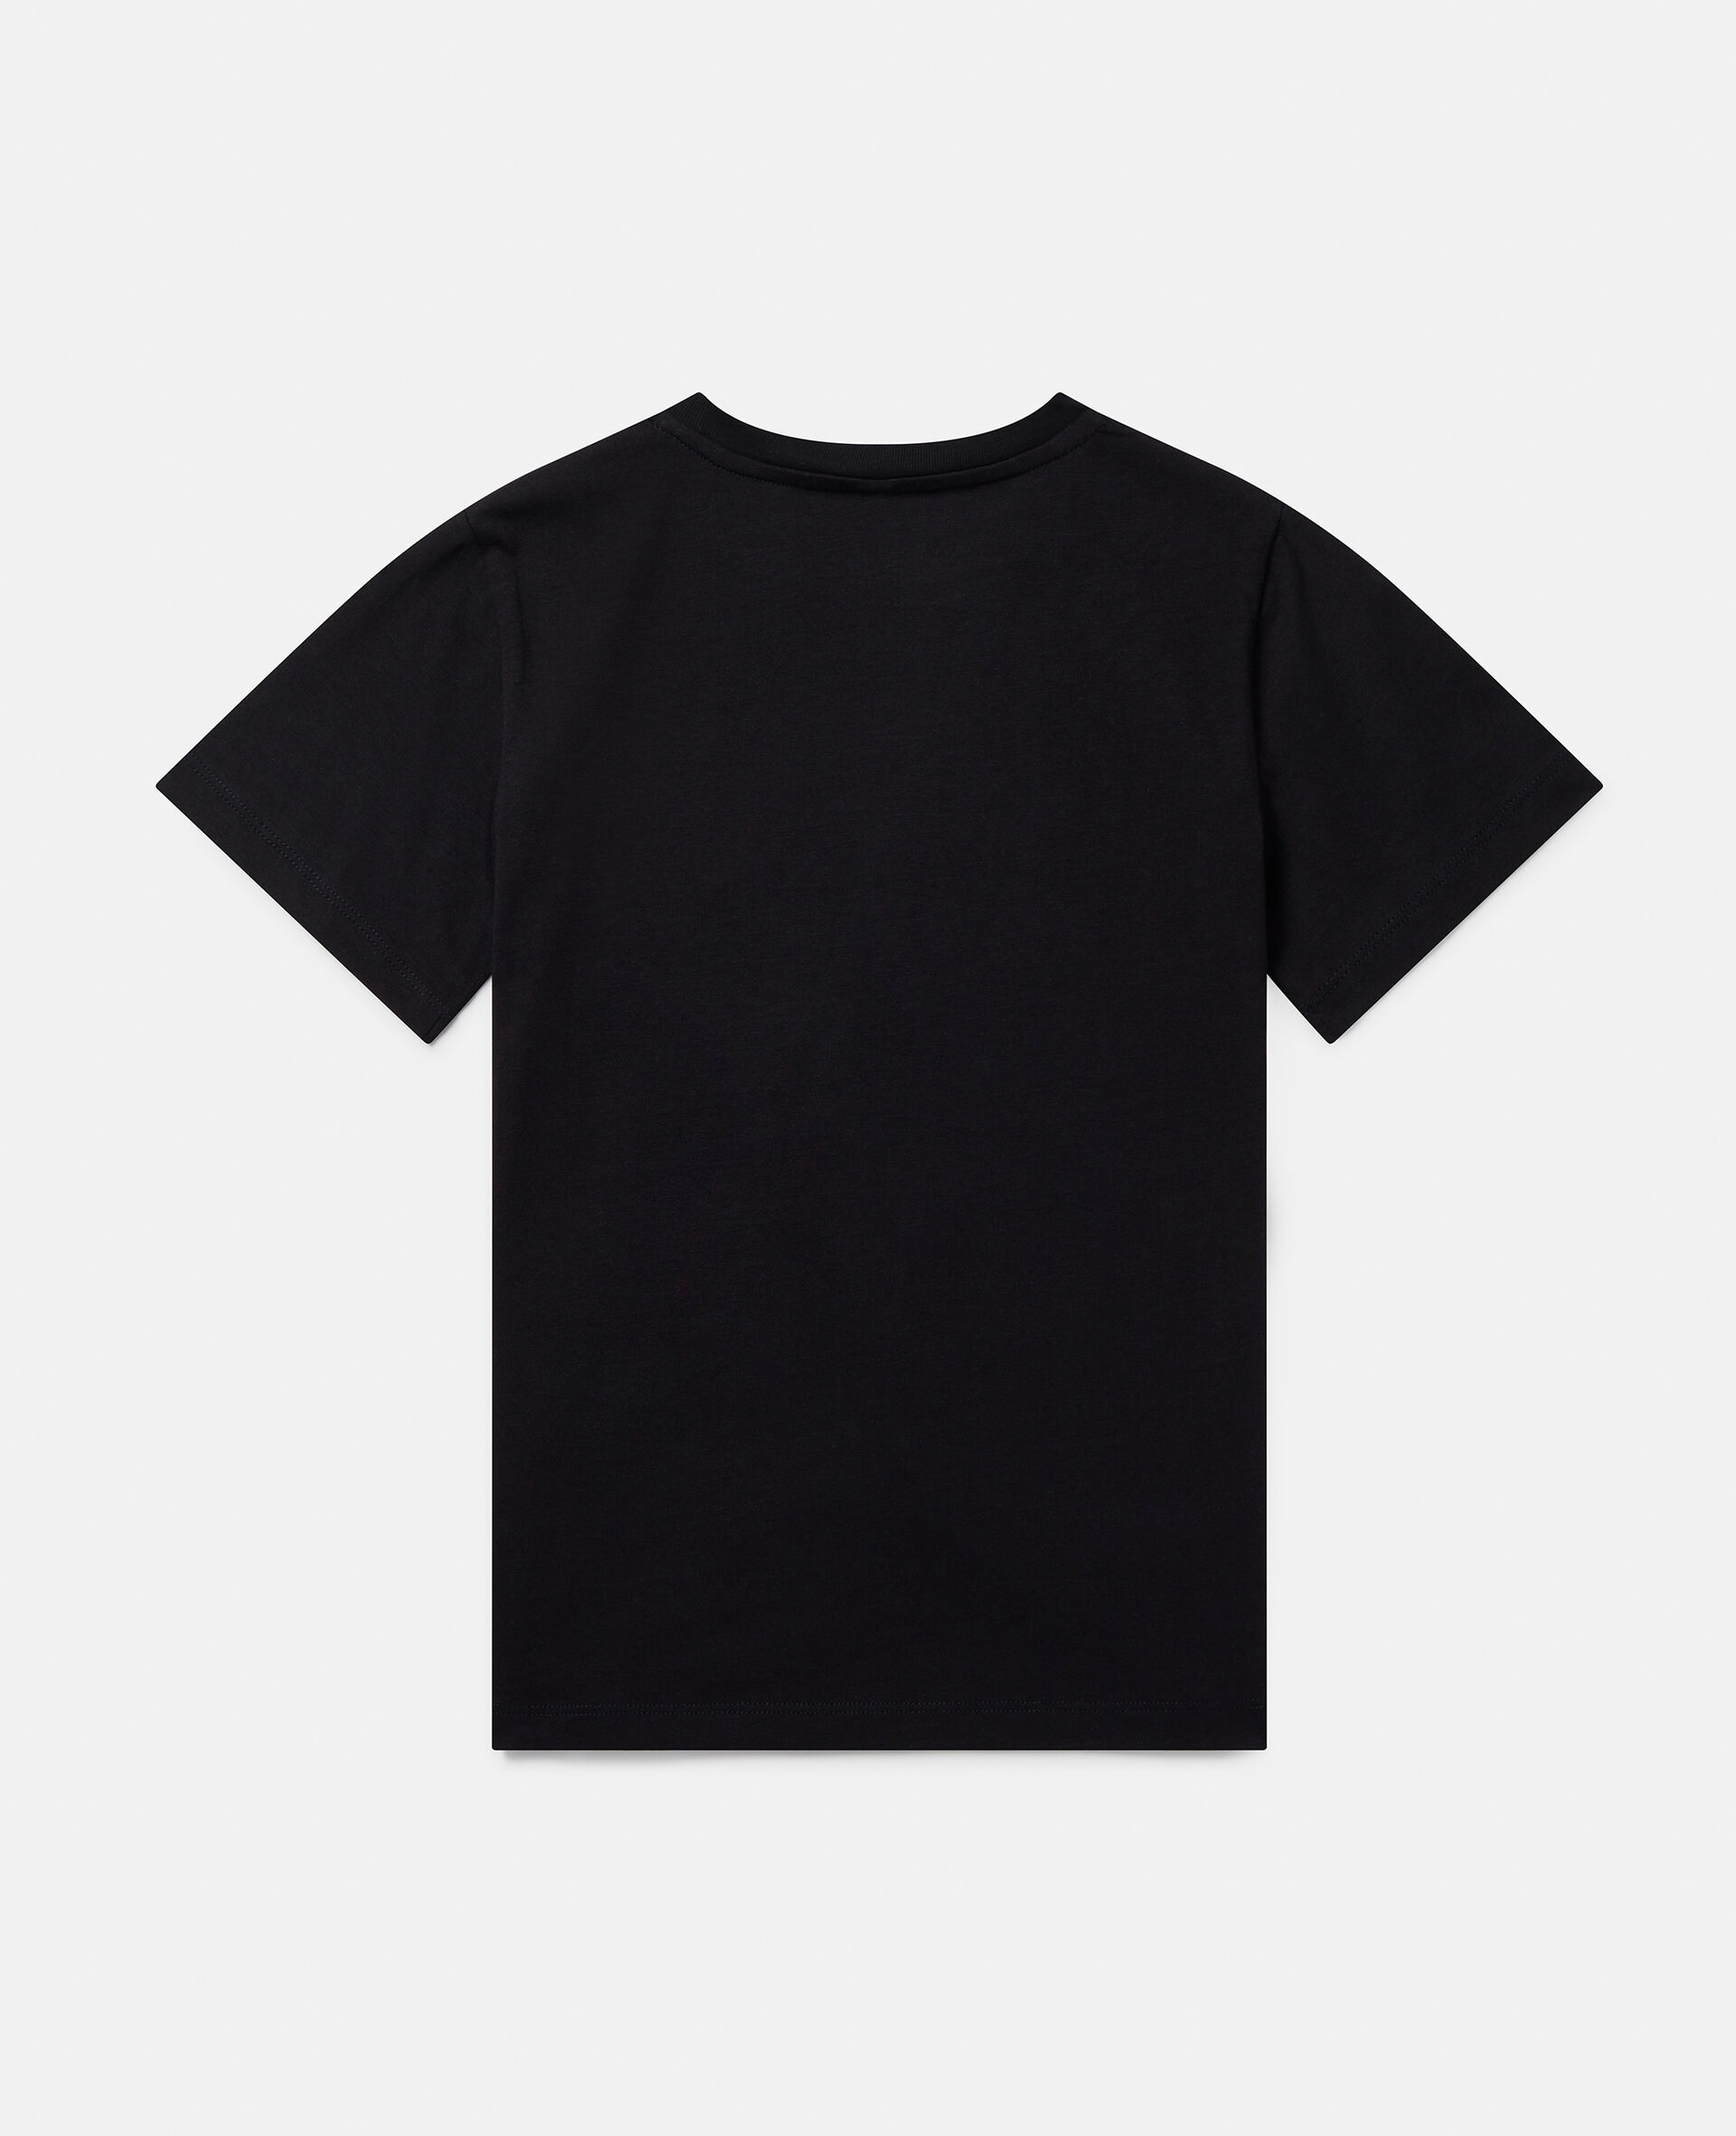 Monkey Family Print T-Shirt-Black-large image number 2